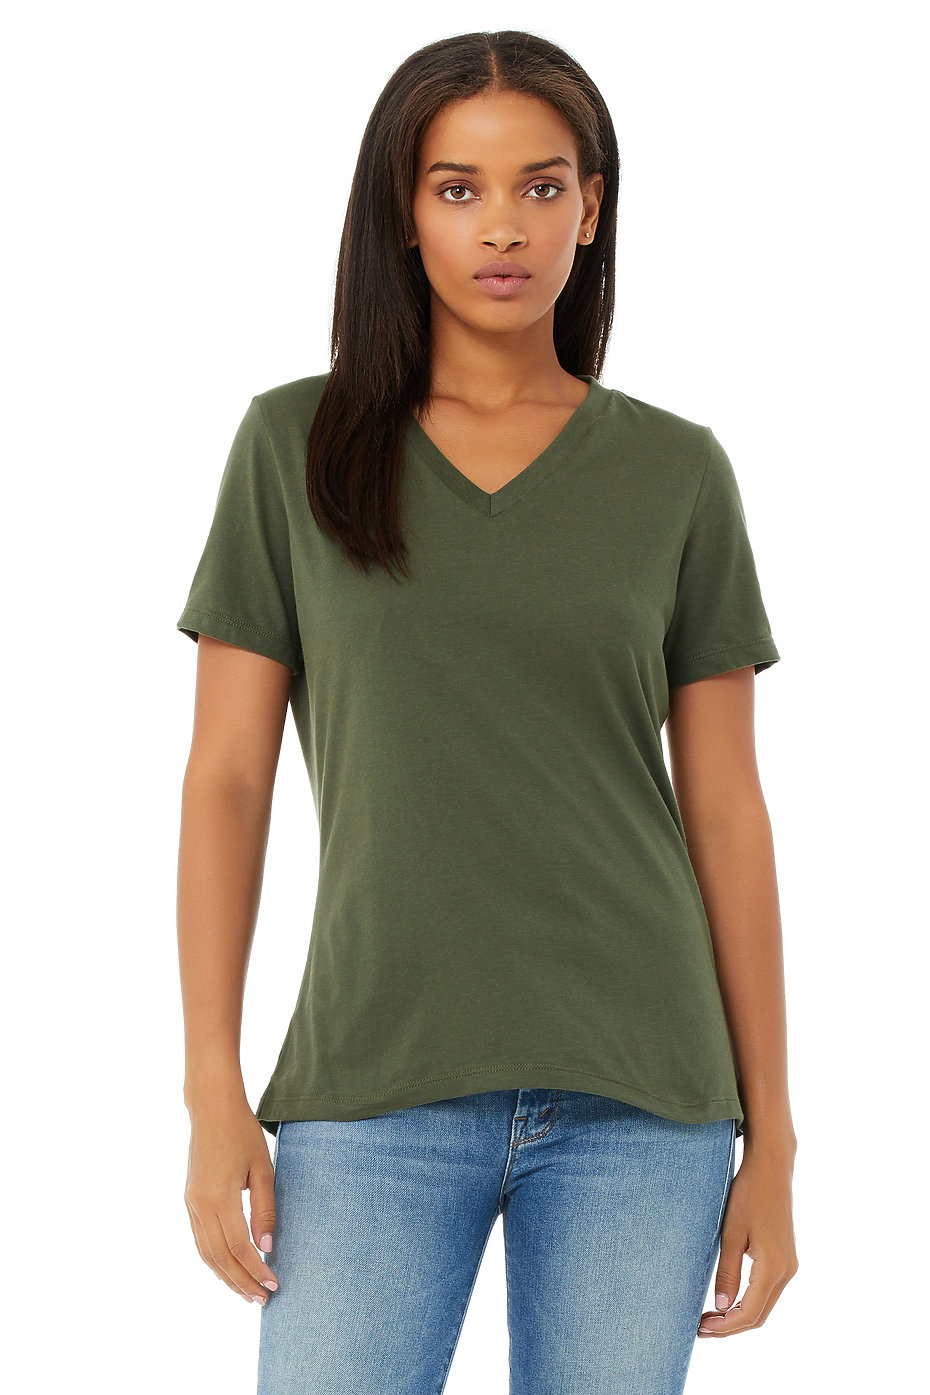 WOMEN FASHION Shirts & T-shirts Shirt Print Pull&Bear Shirt discount 65% Green S 